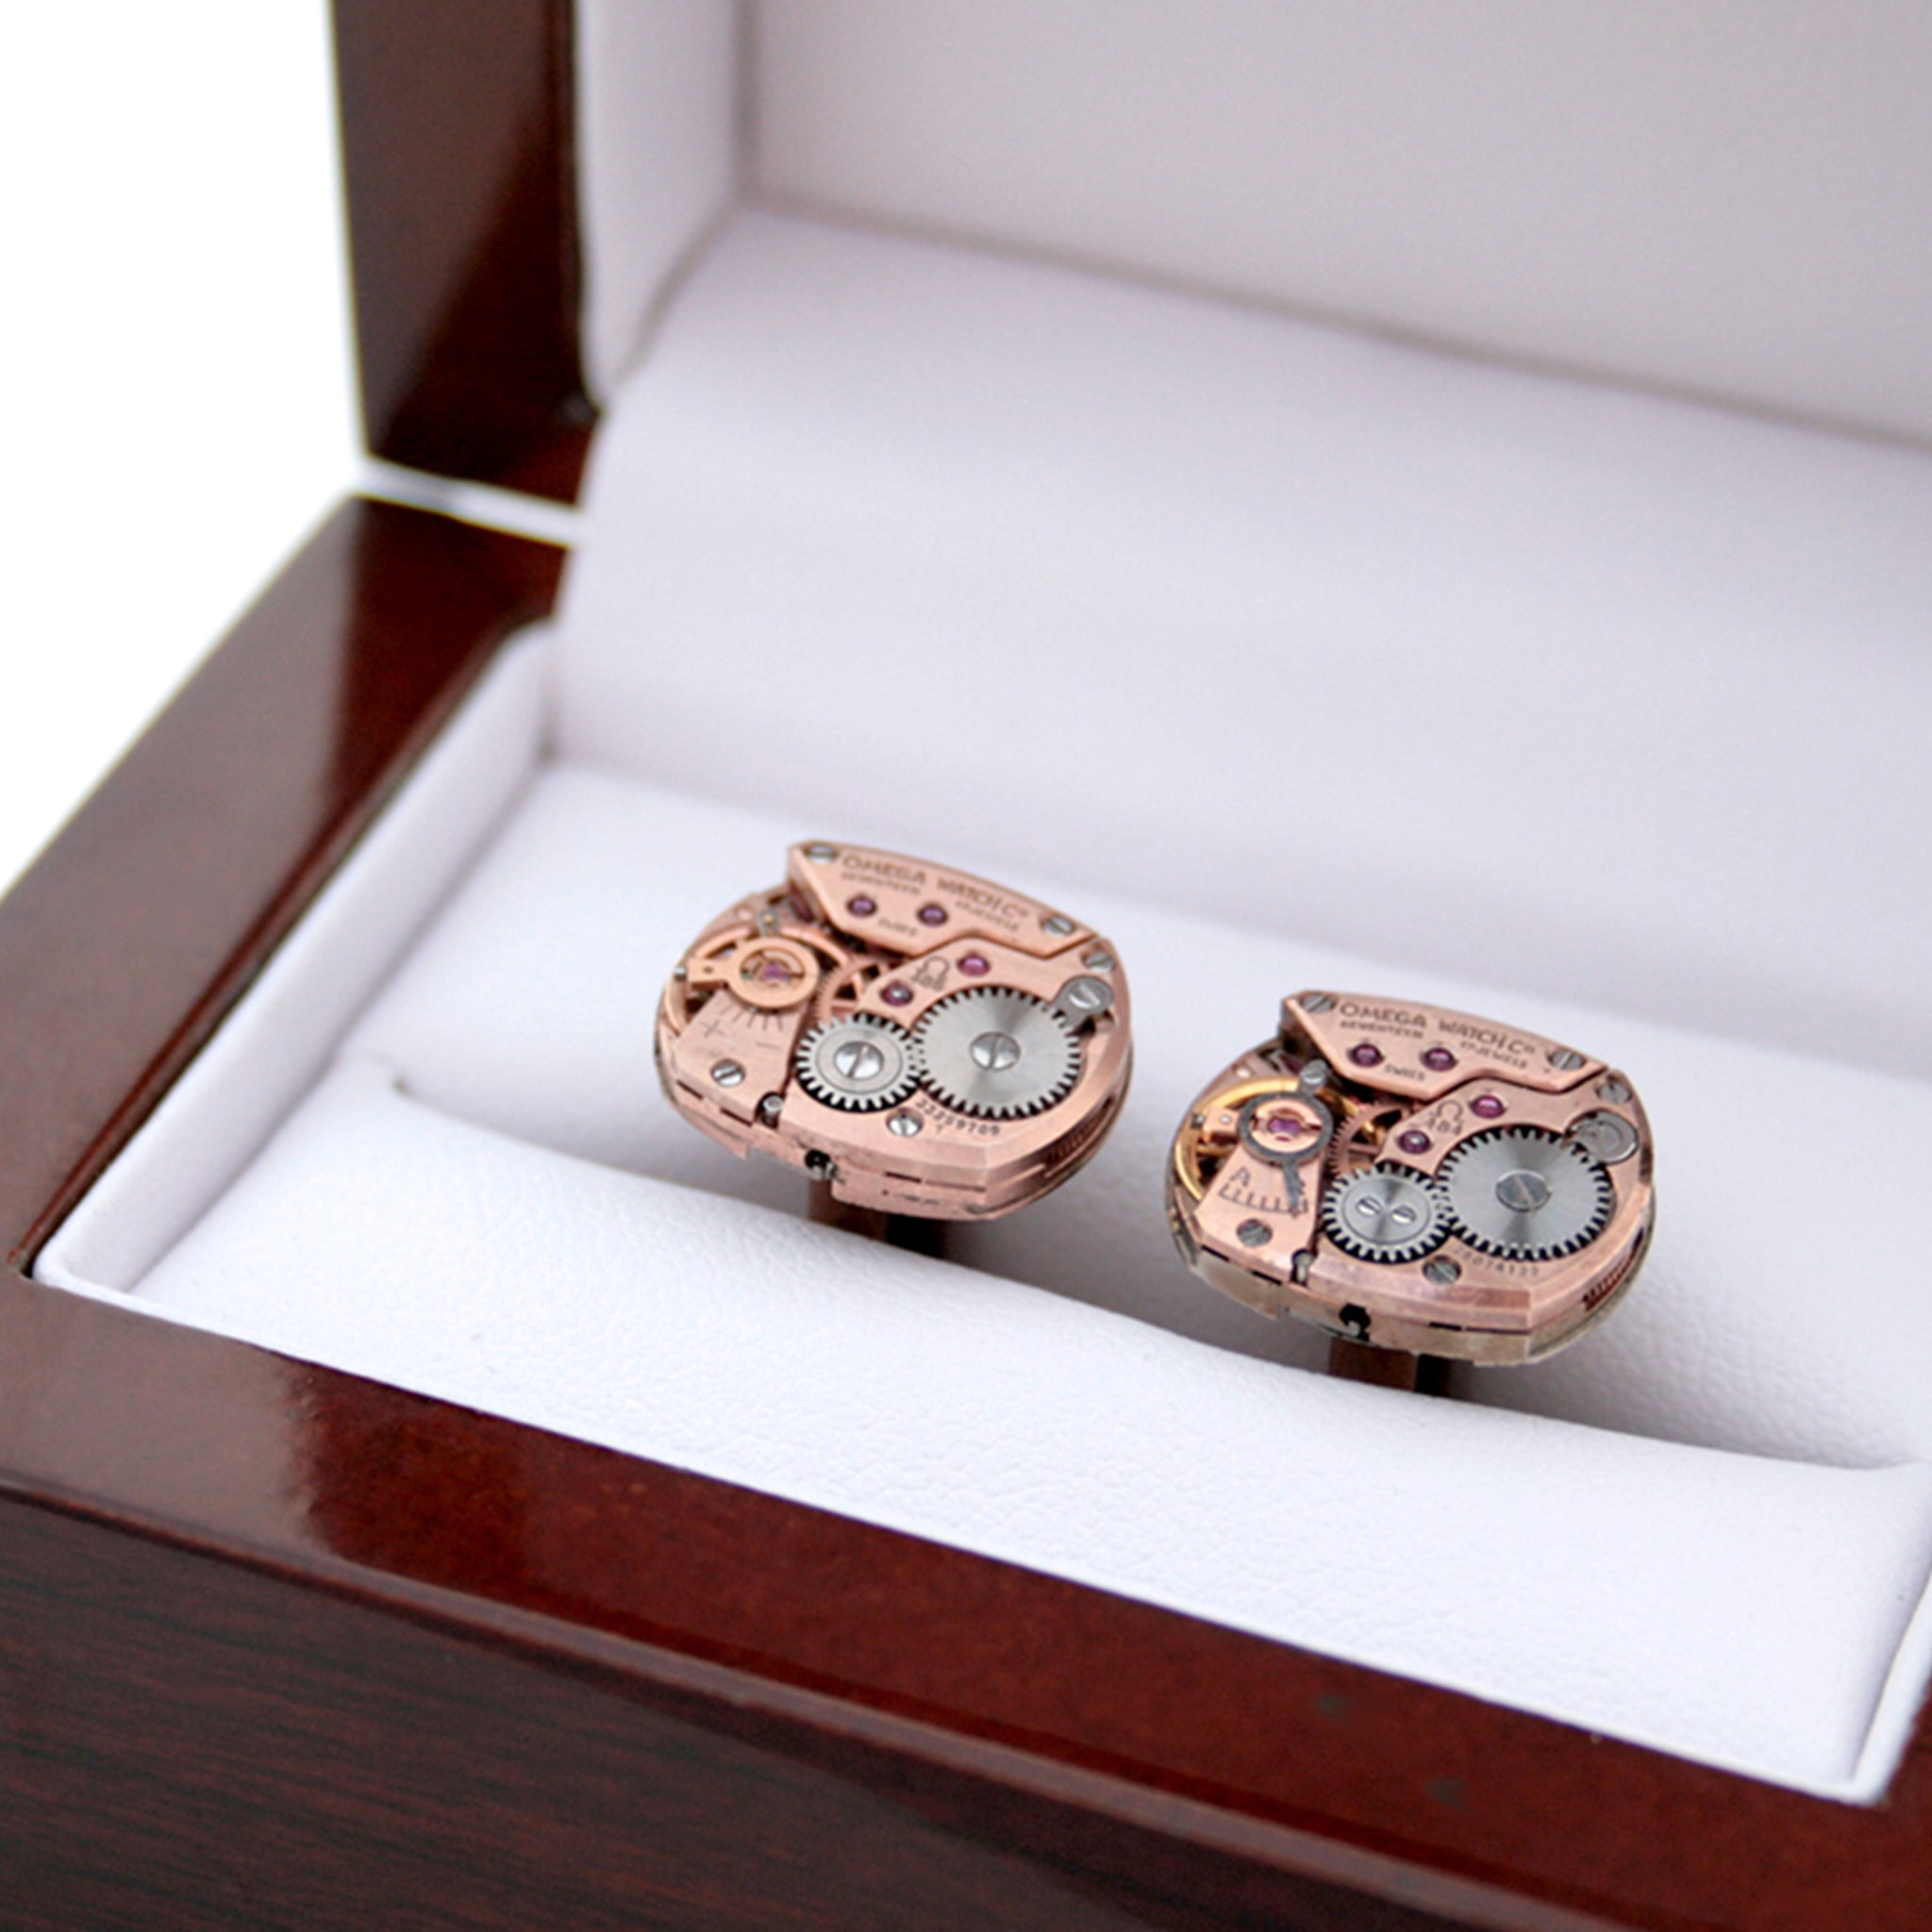 Omega Watch Copper Cufflinks in wooden box